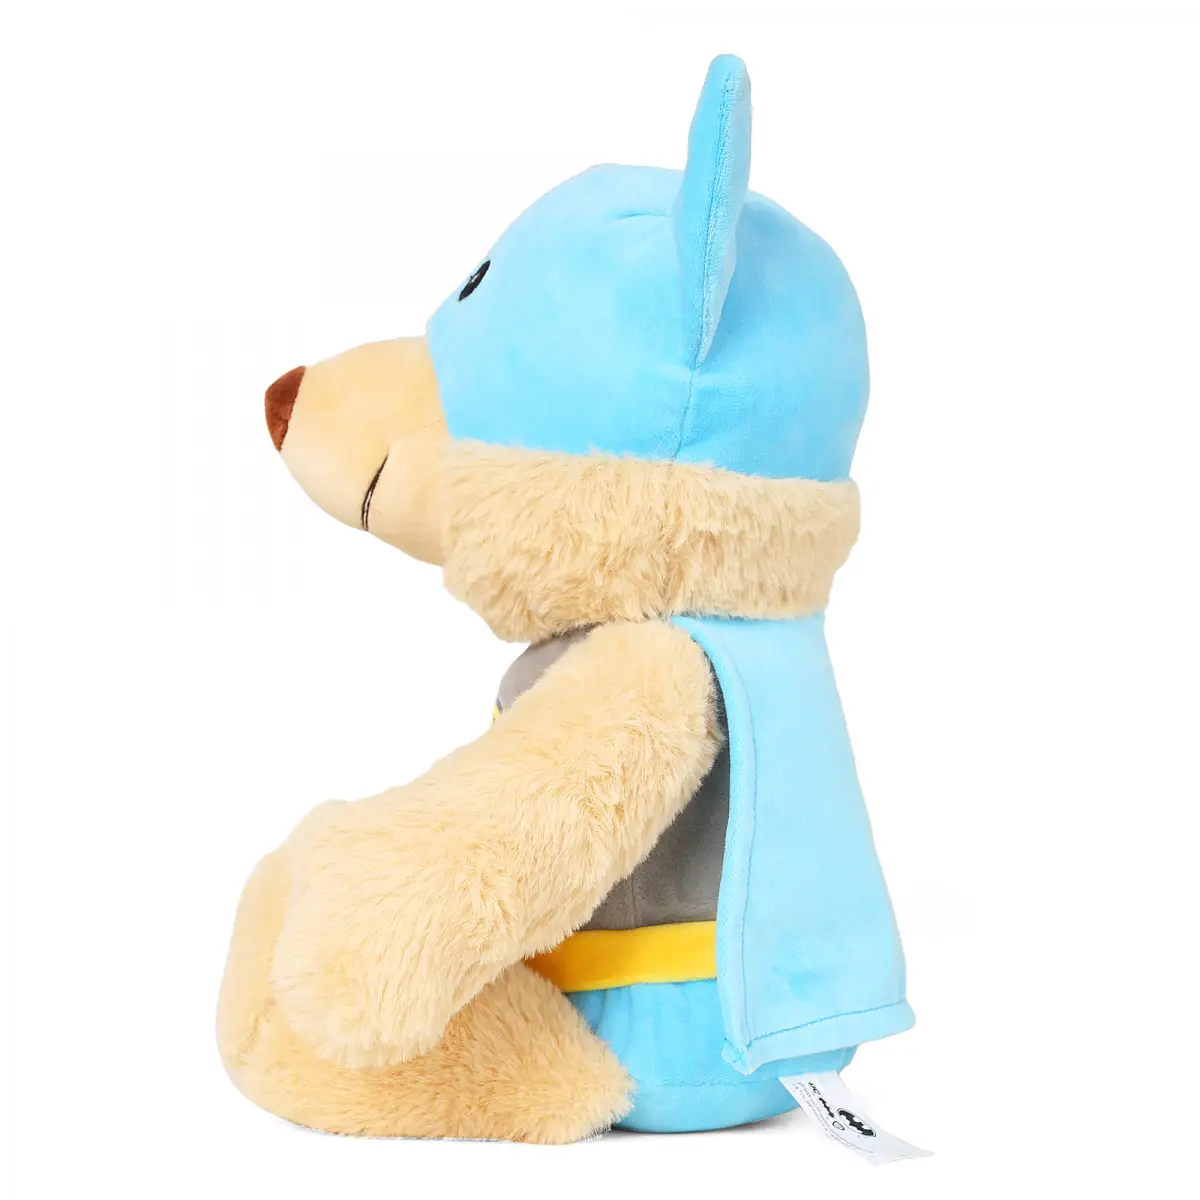 Mirada Batman Bear Cute Soft Toy for Kids, 18M+, 30cm, Brown